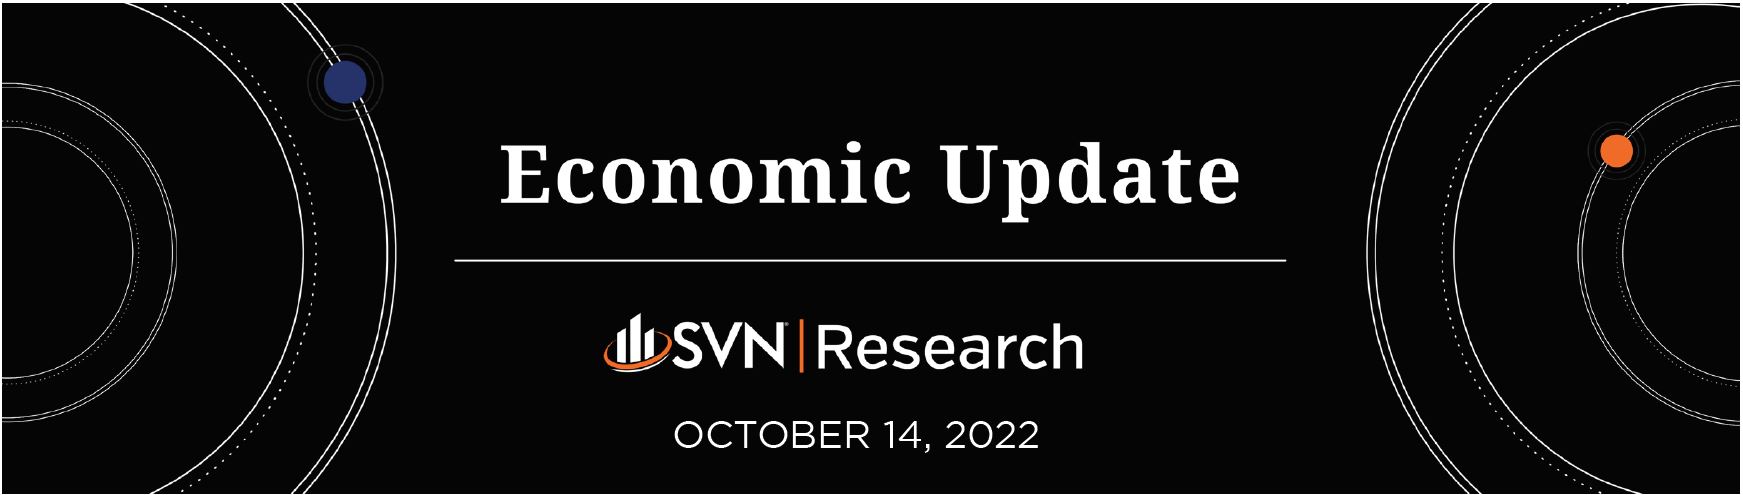 SVN | Research Economic Update 10.14.2022